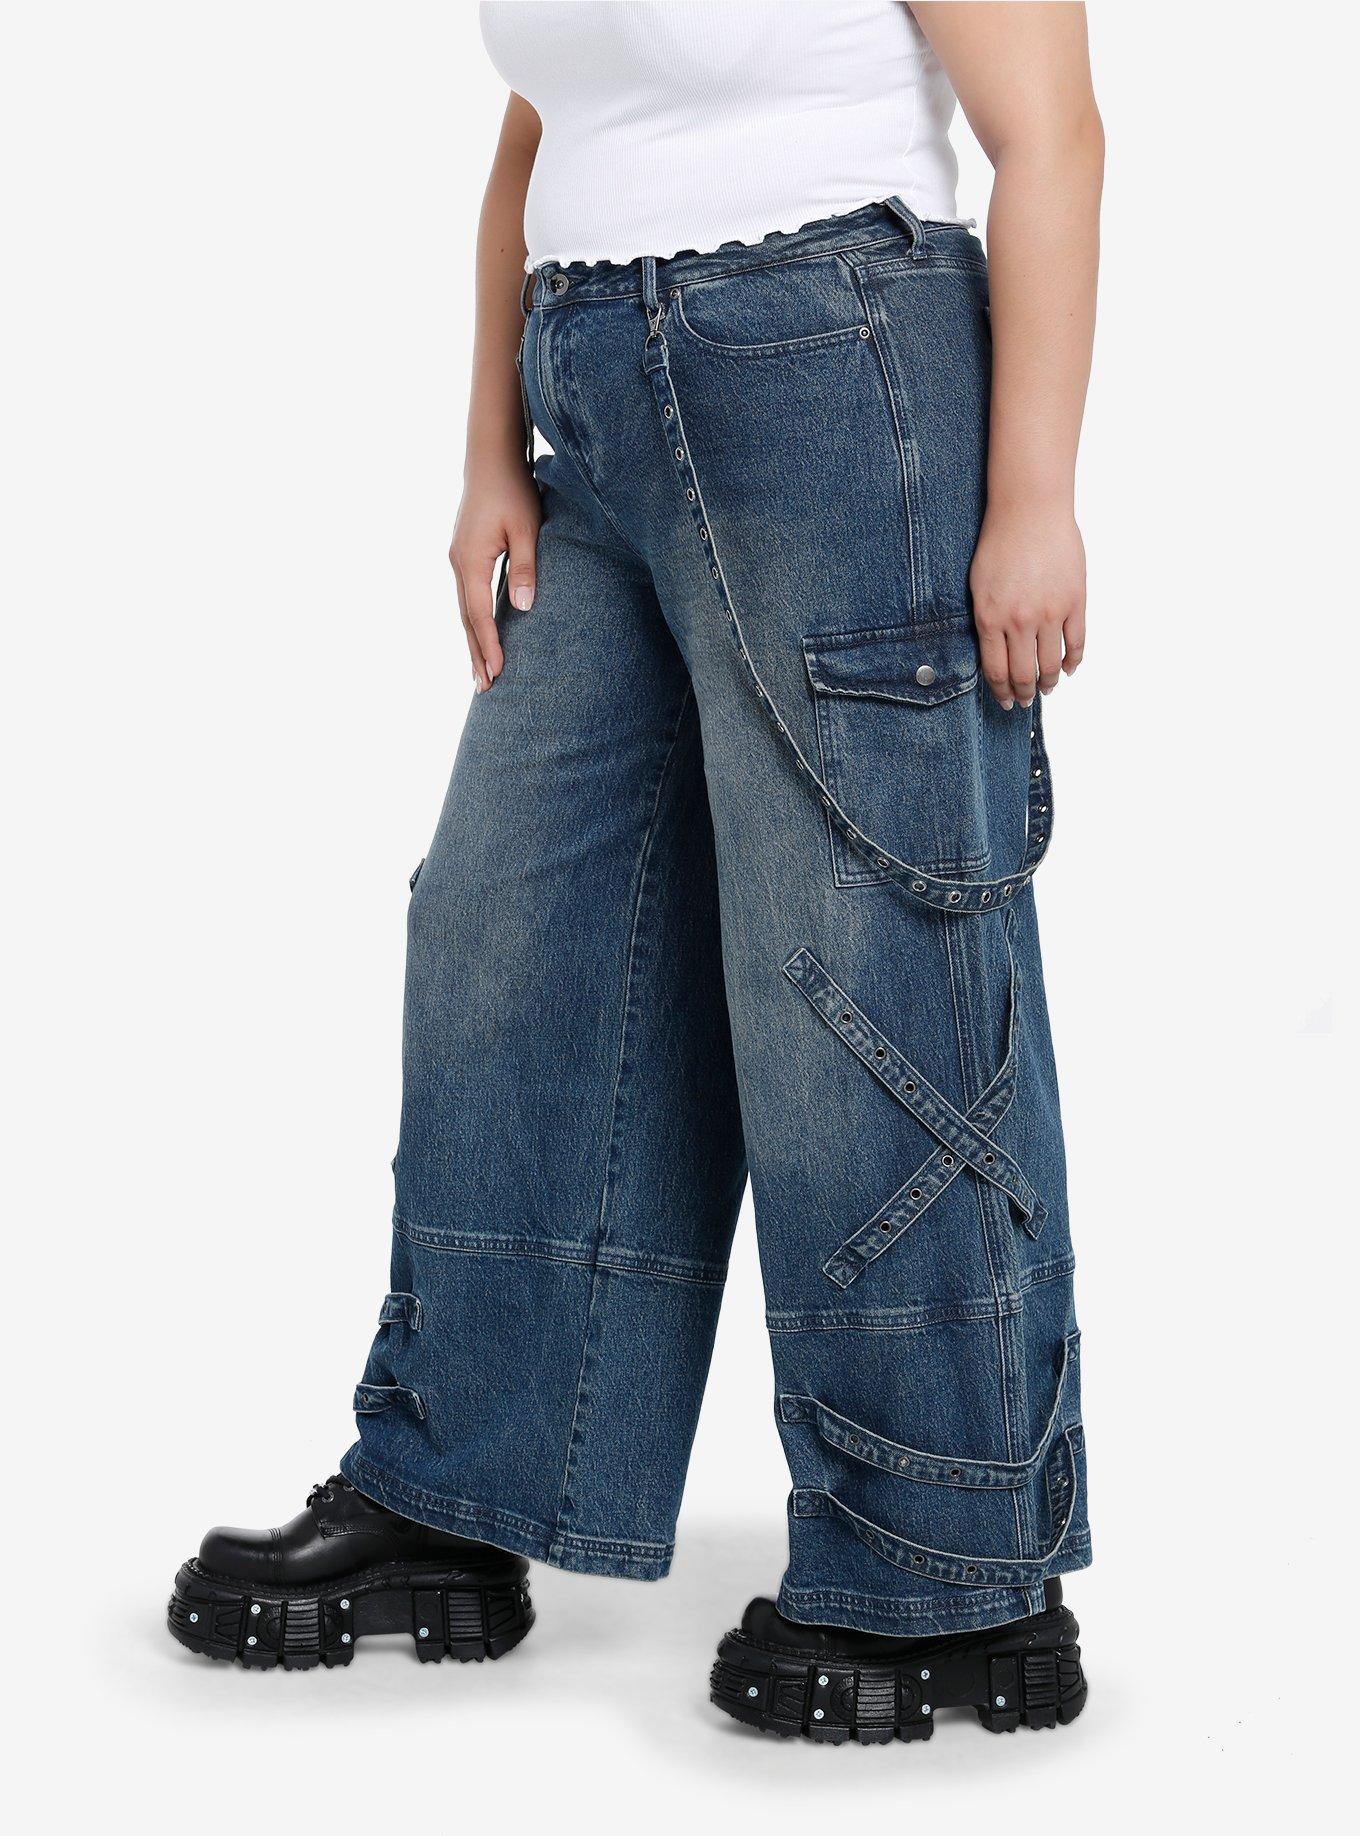 Washed Indigo Denim Harness Girls Wide-Leg Jeans Plus Size, INDIGO, alternate